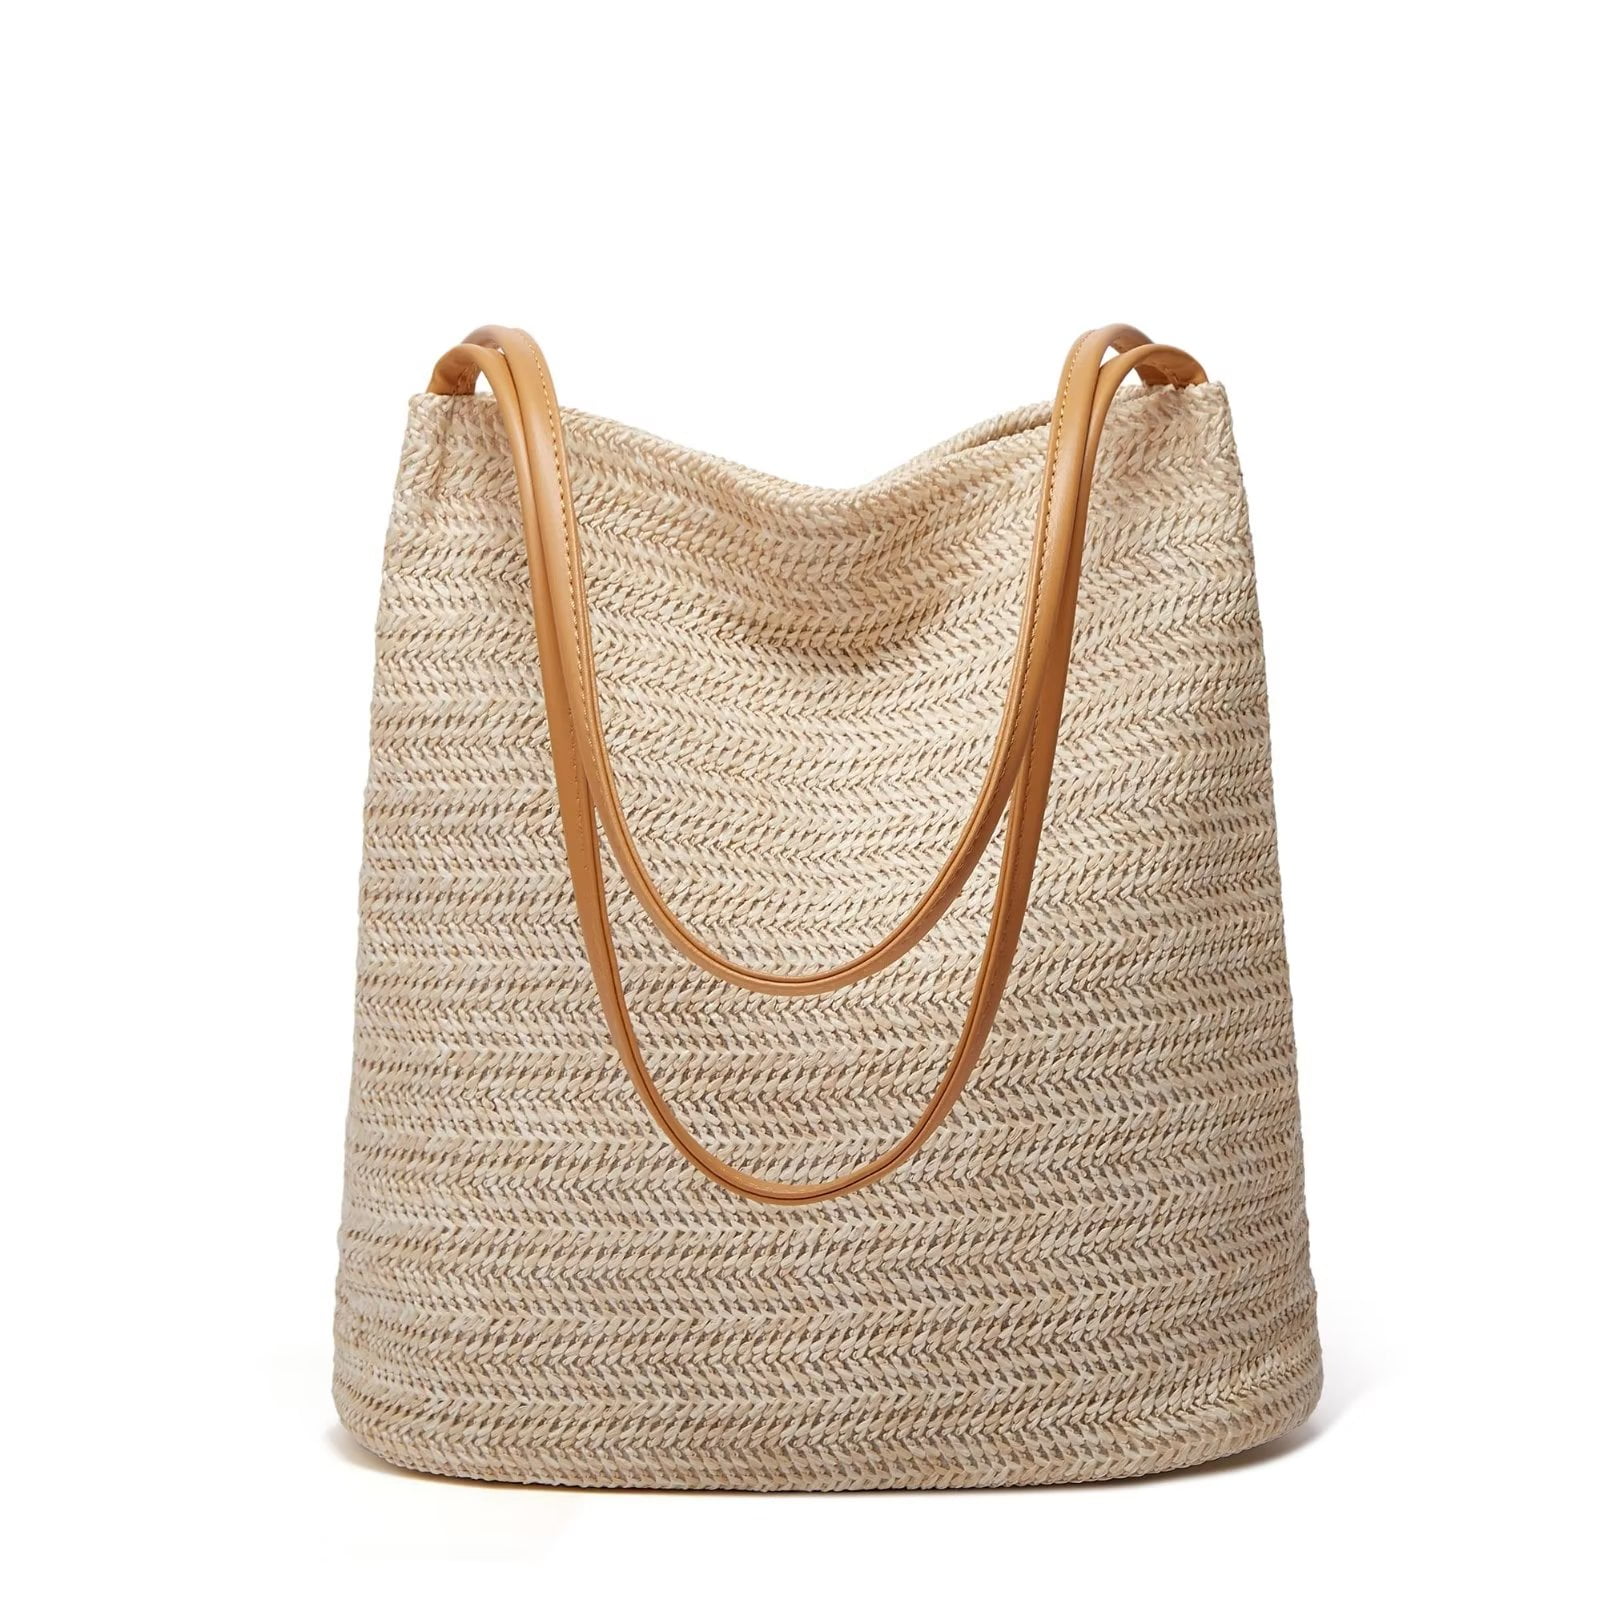 Tote Bag for Women Small Satchel Bag Straw Beach Bag Cute Hobo Bag ...